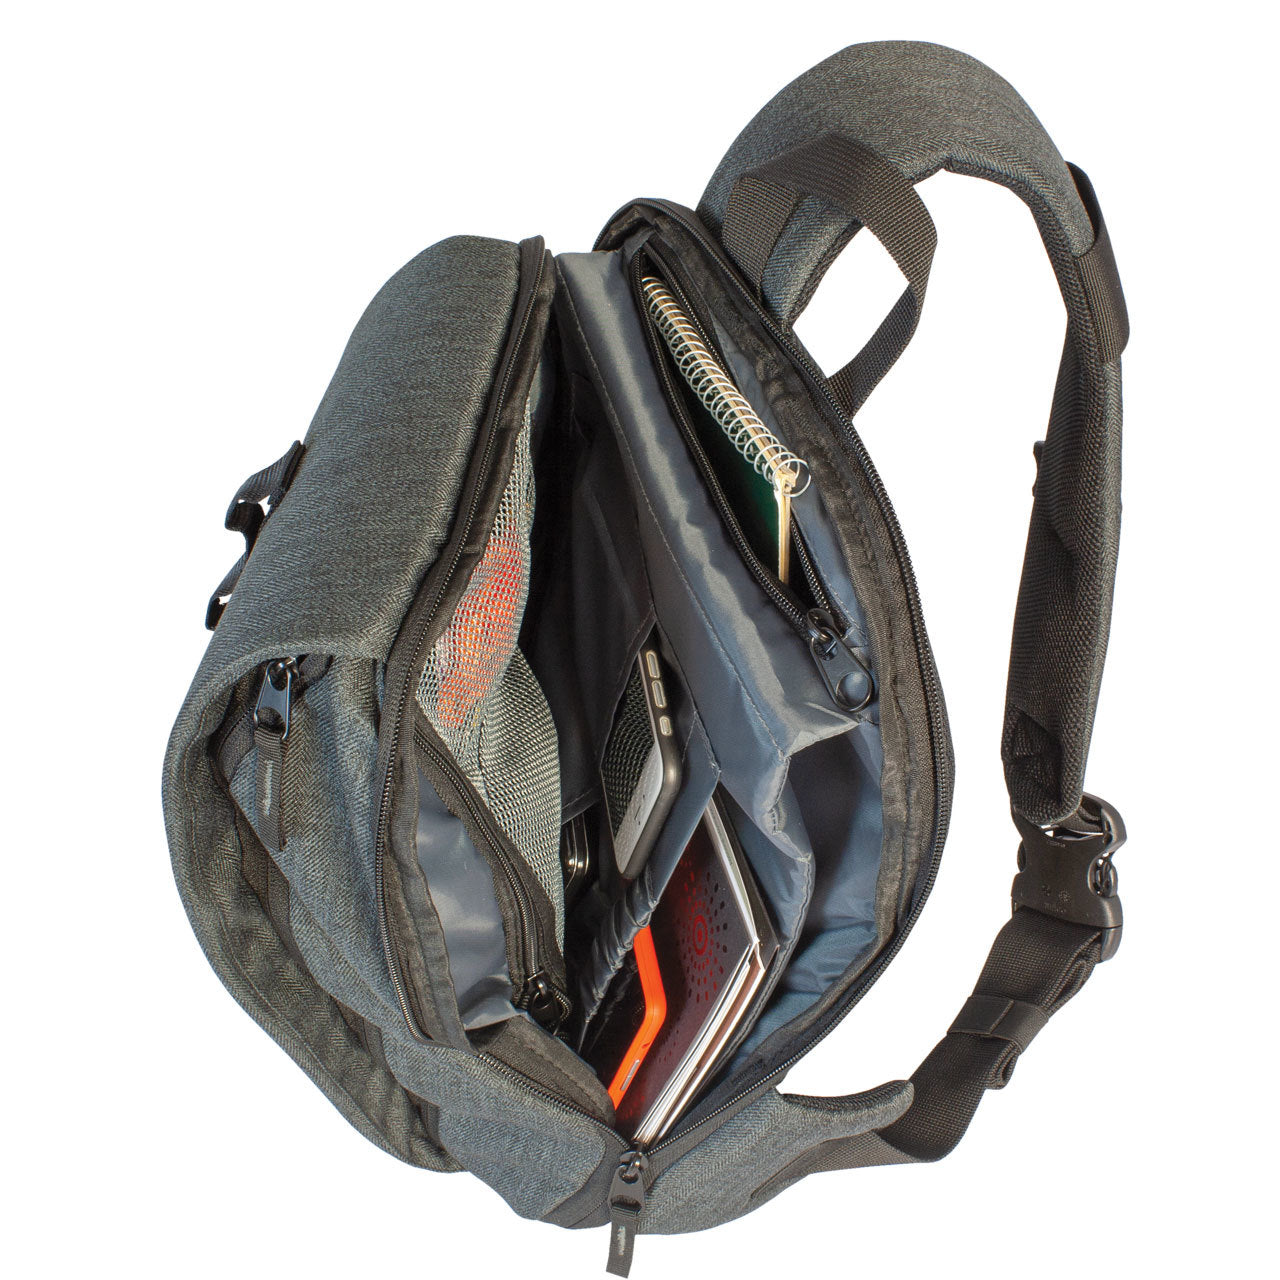 single strap - sling pack - casual medium sling pack - tablet sling pack - concealment urban slingpack -Sonoma Sling pack - SquatchSurvivalGear